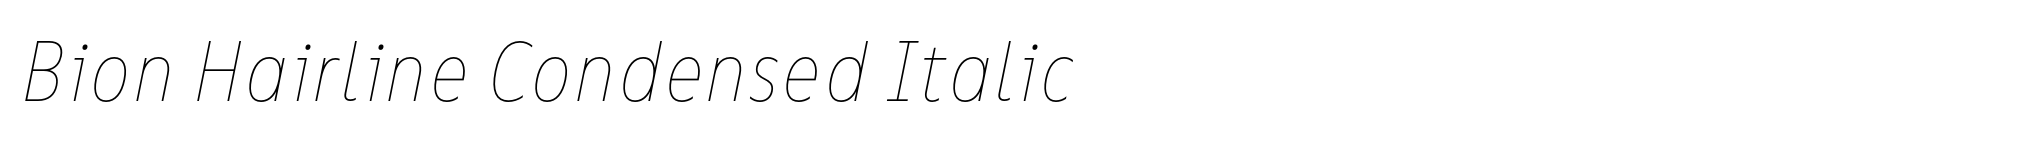 Bion Hairline Condensed Italic image